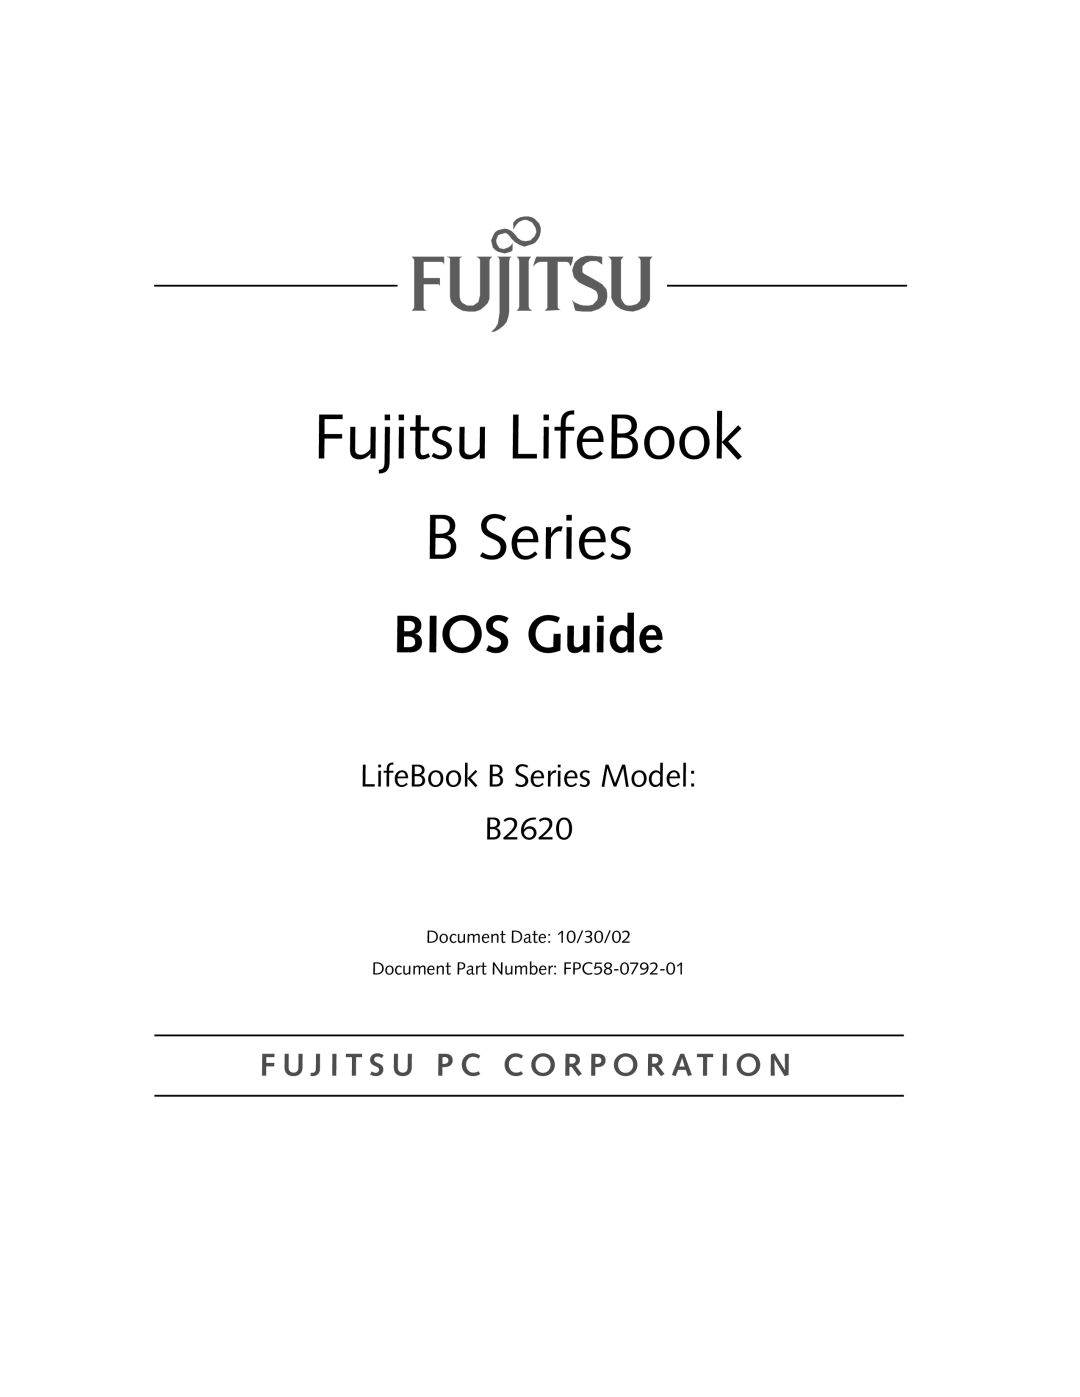 Fujitsu manual Fujitsu LifeBook, BIOS Guide, LifeBook B Series Model B2620, F U J I T S U P C C O R P O R At I O N 